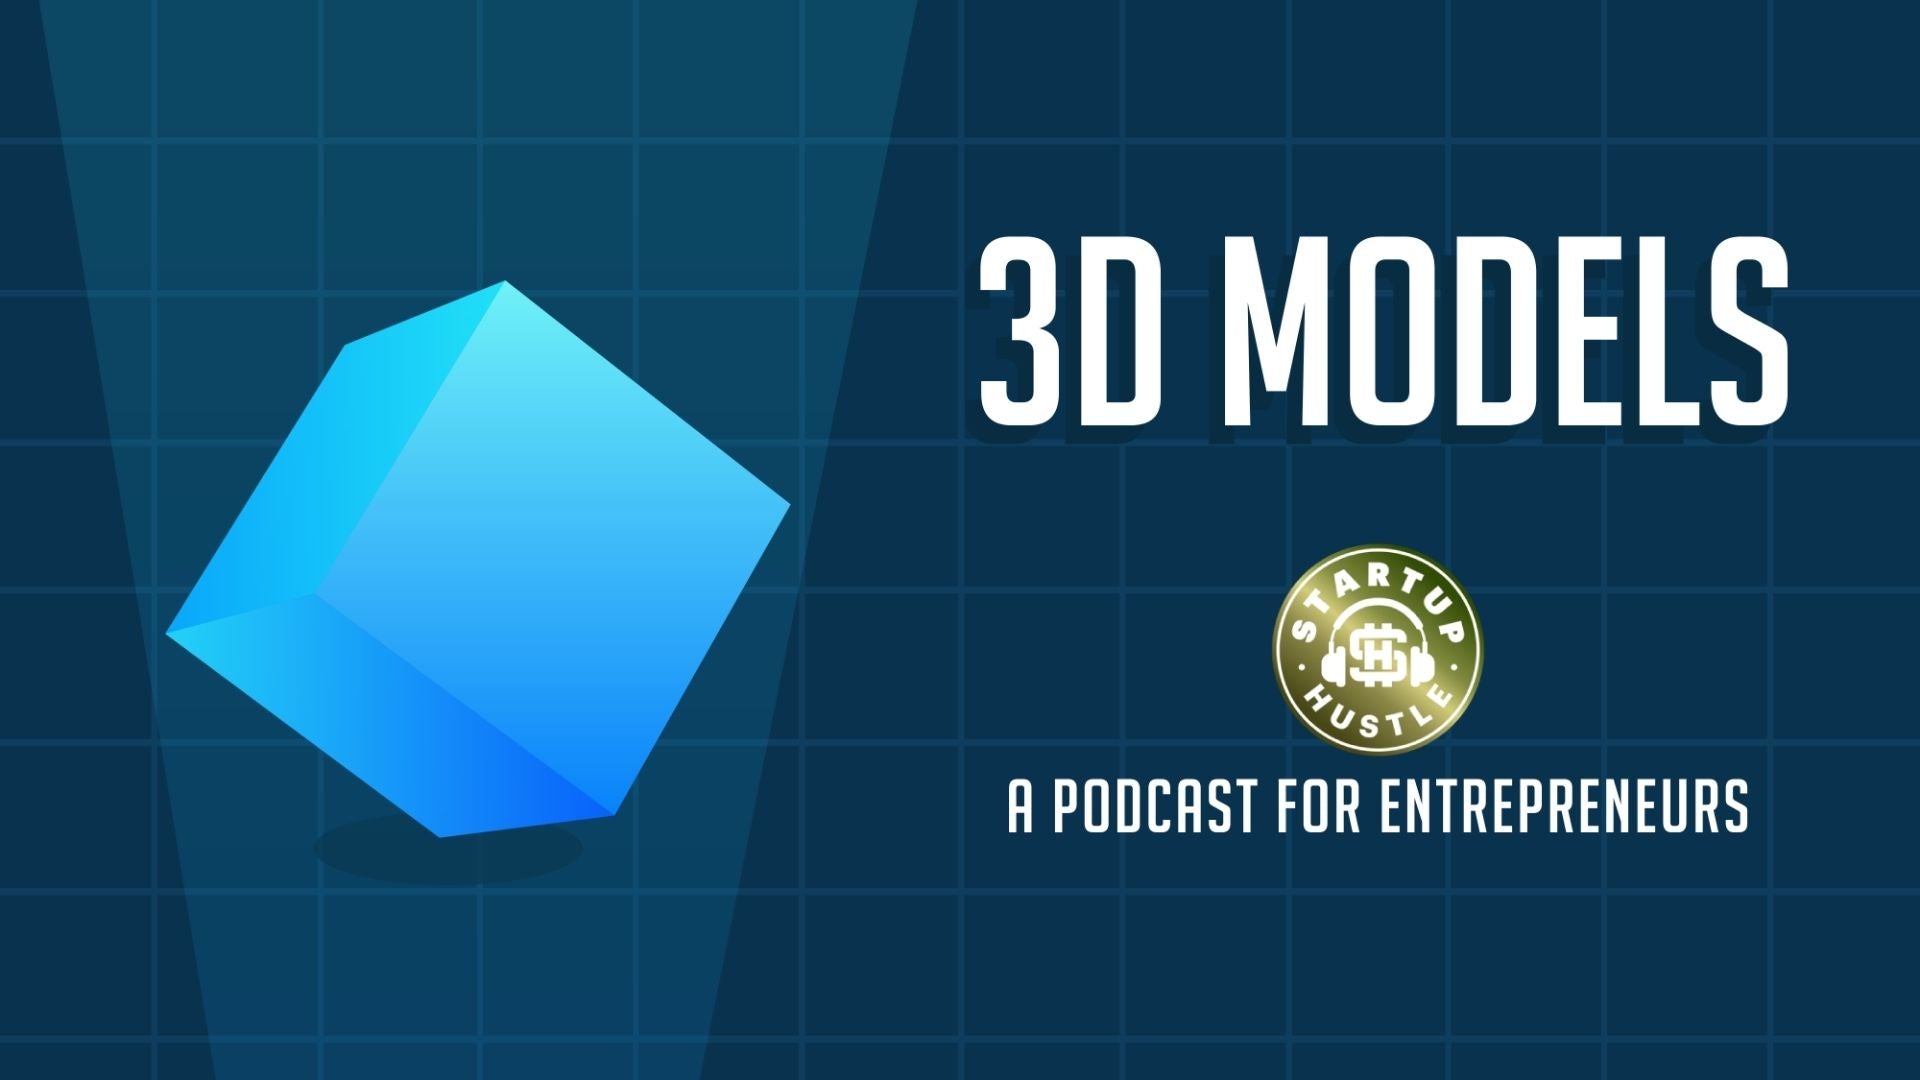 Start Up Hustle Podcast Discusses 3D Models For eCommerce